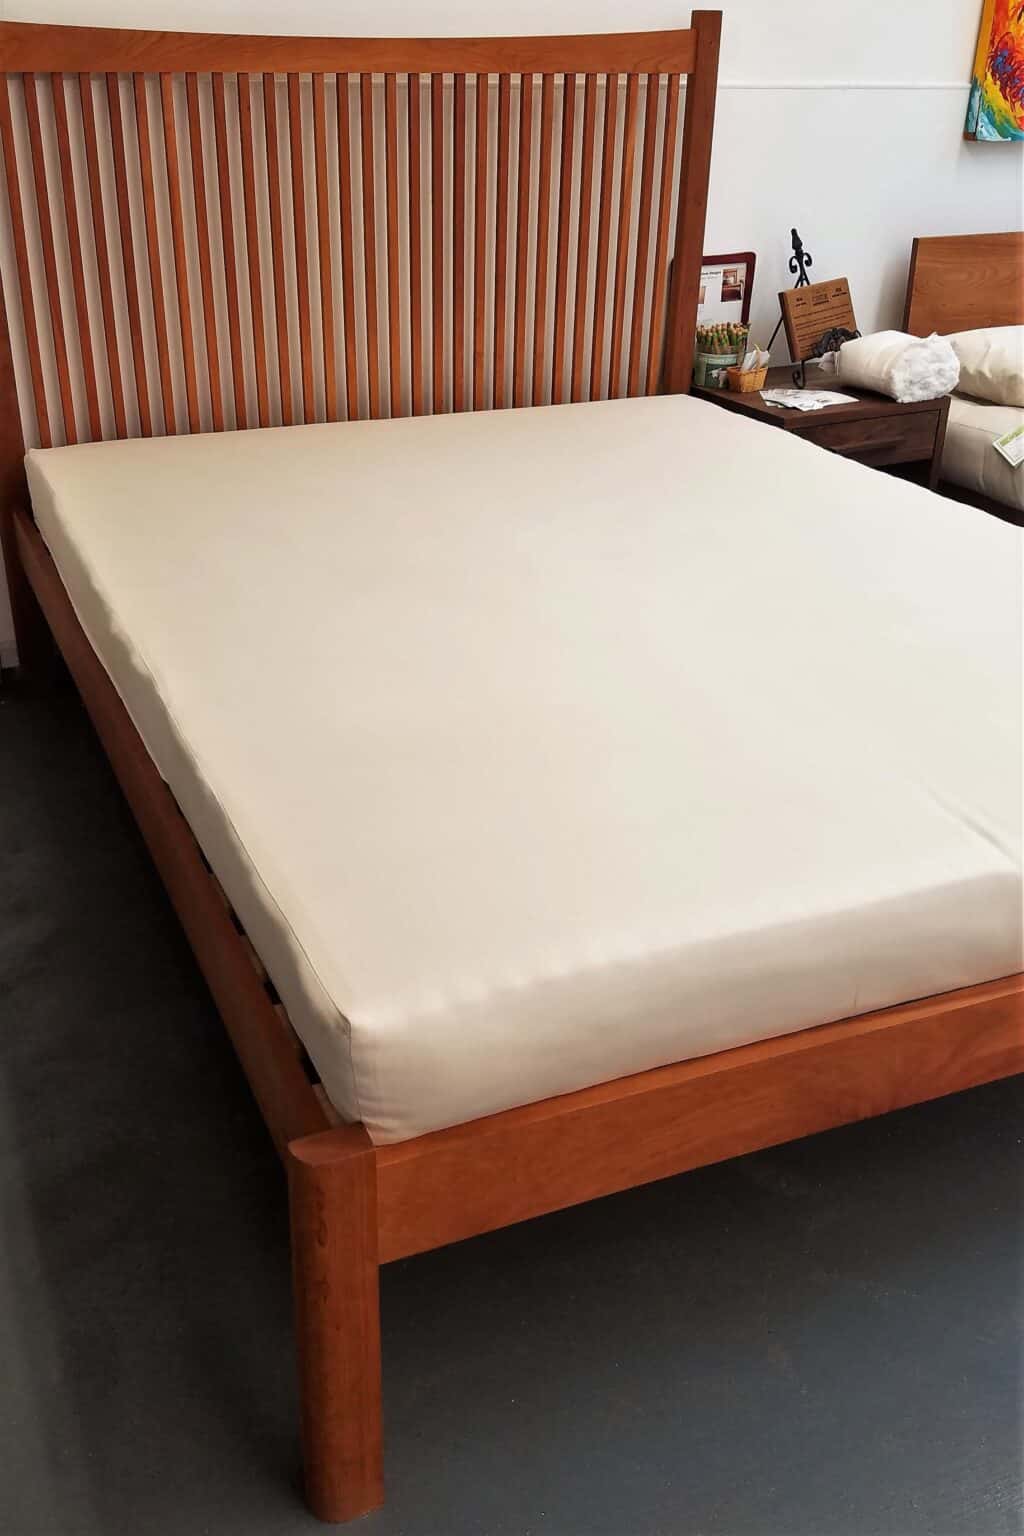 snooze mattress